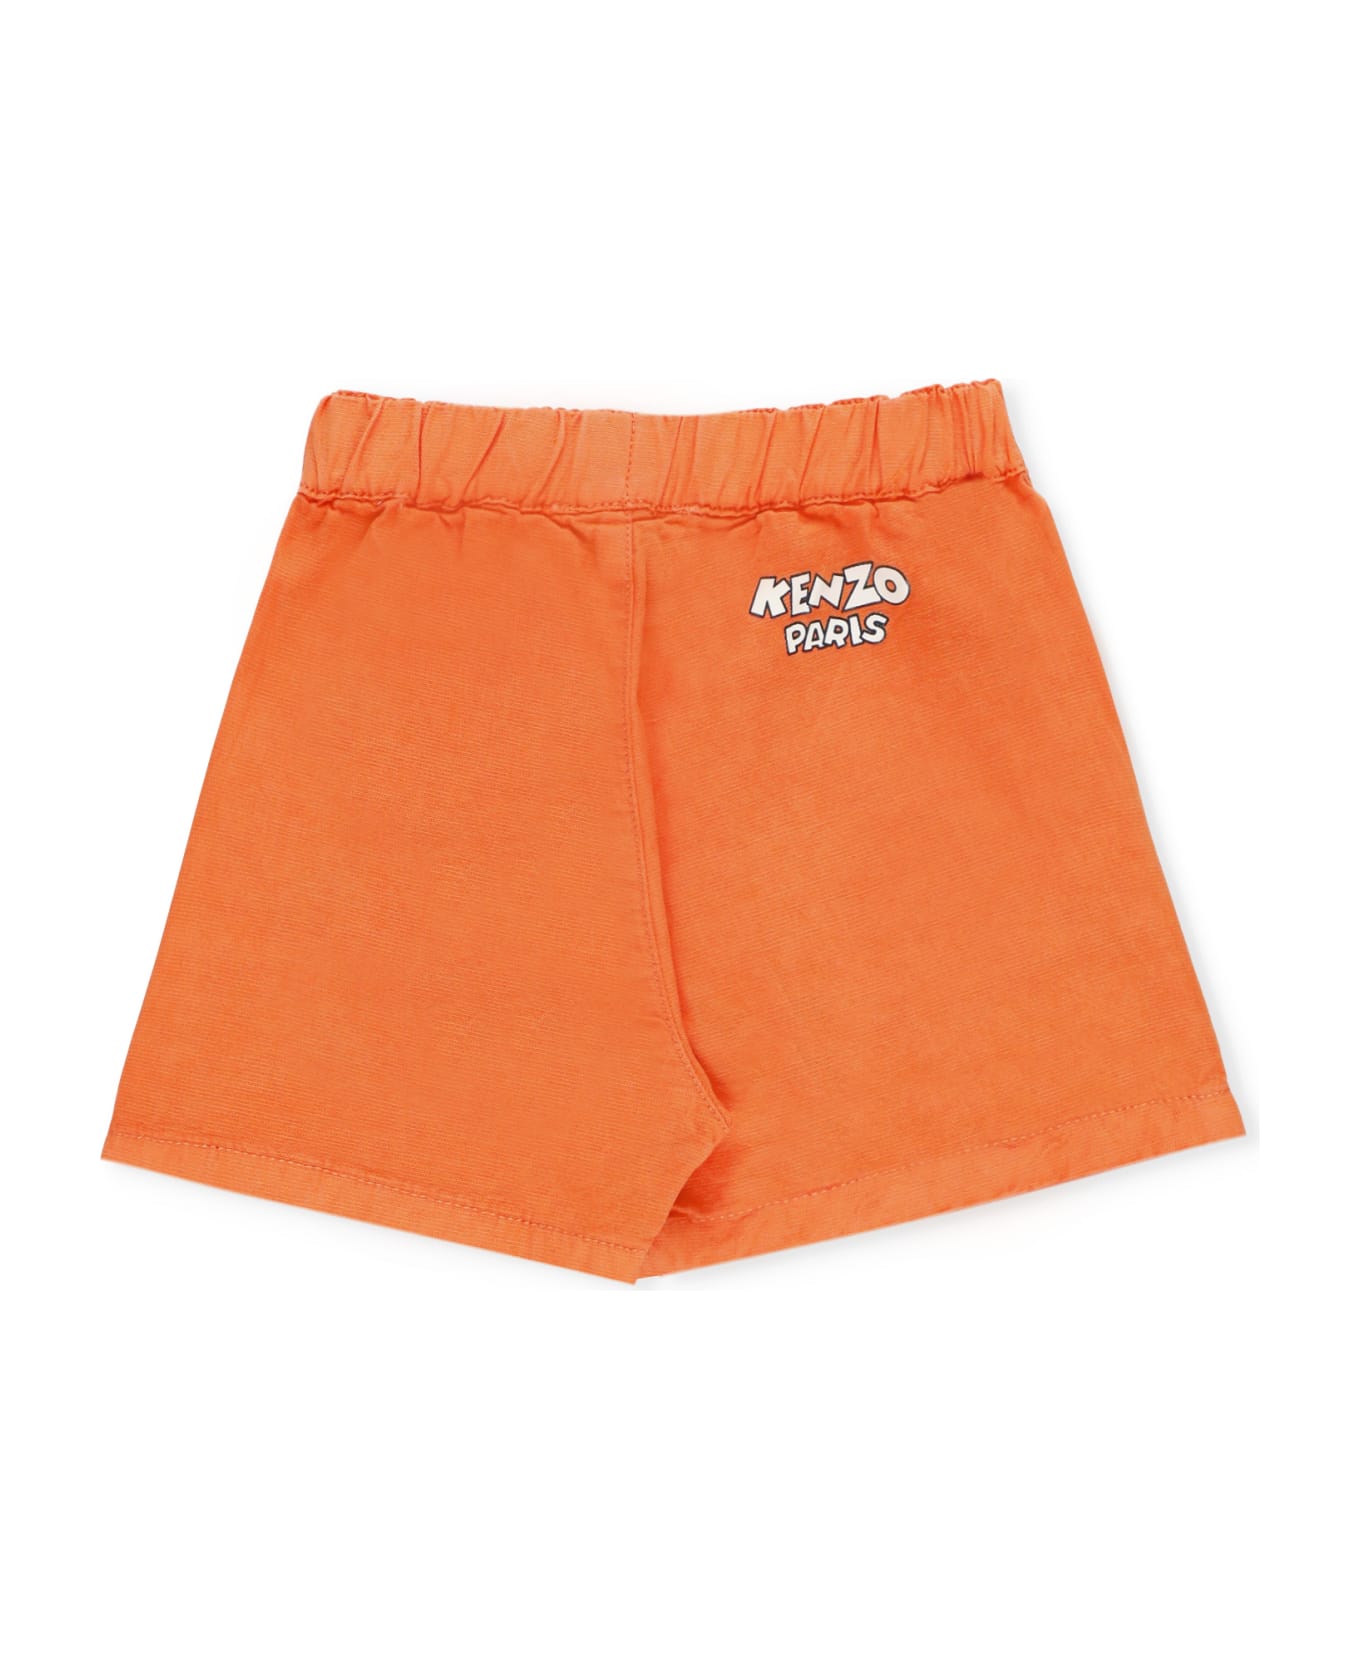 Kenzo Kids Cotton And Linen Shorts - Orange